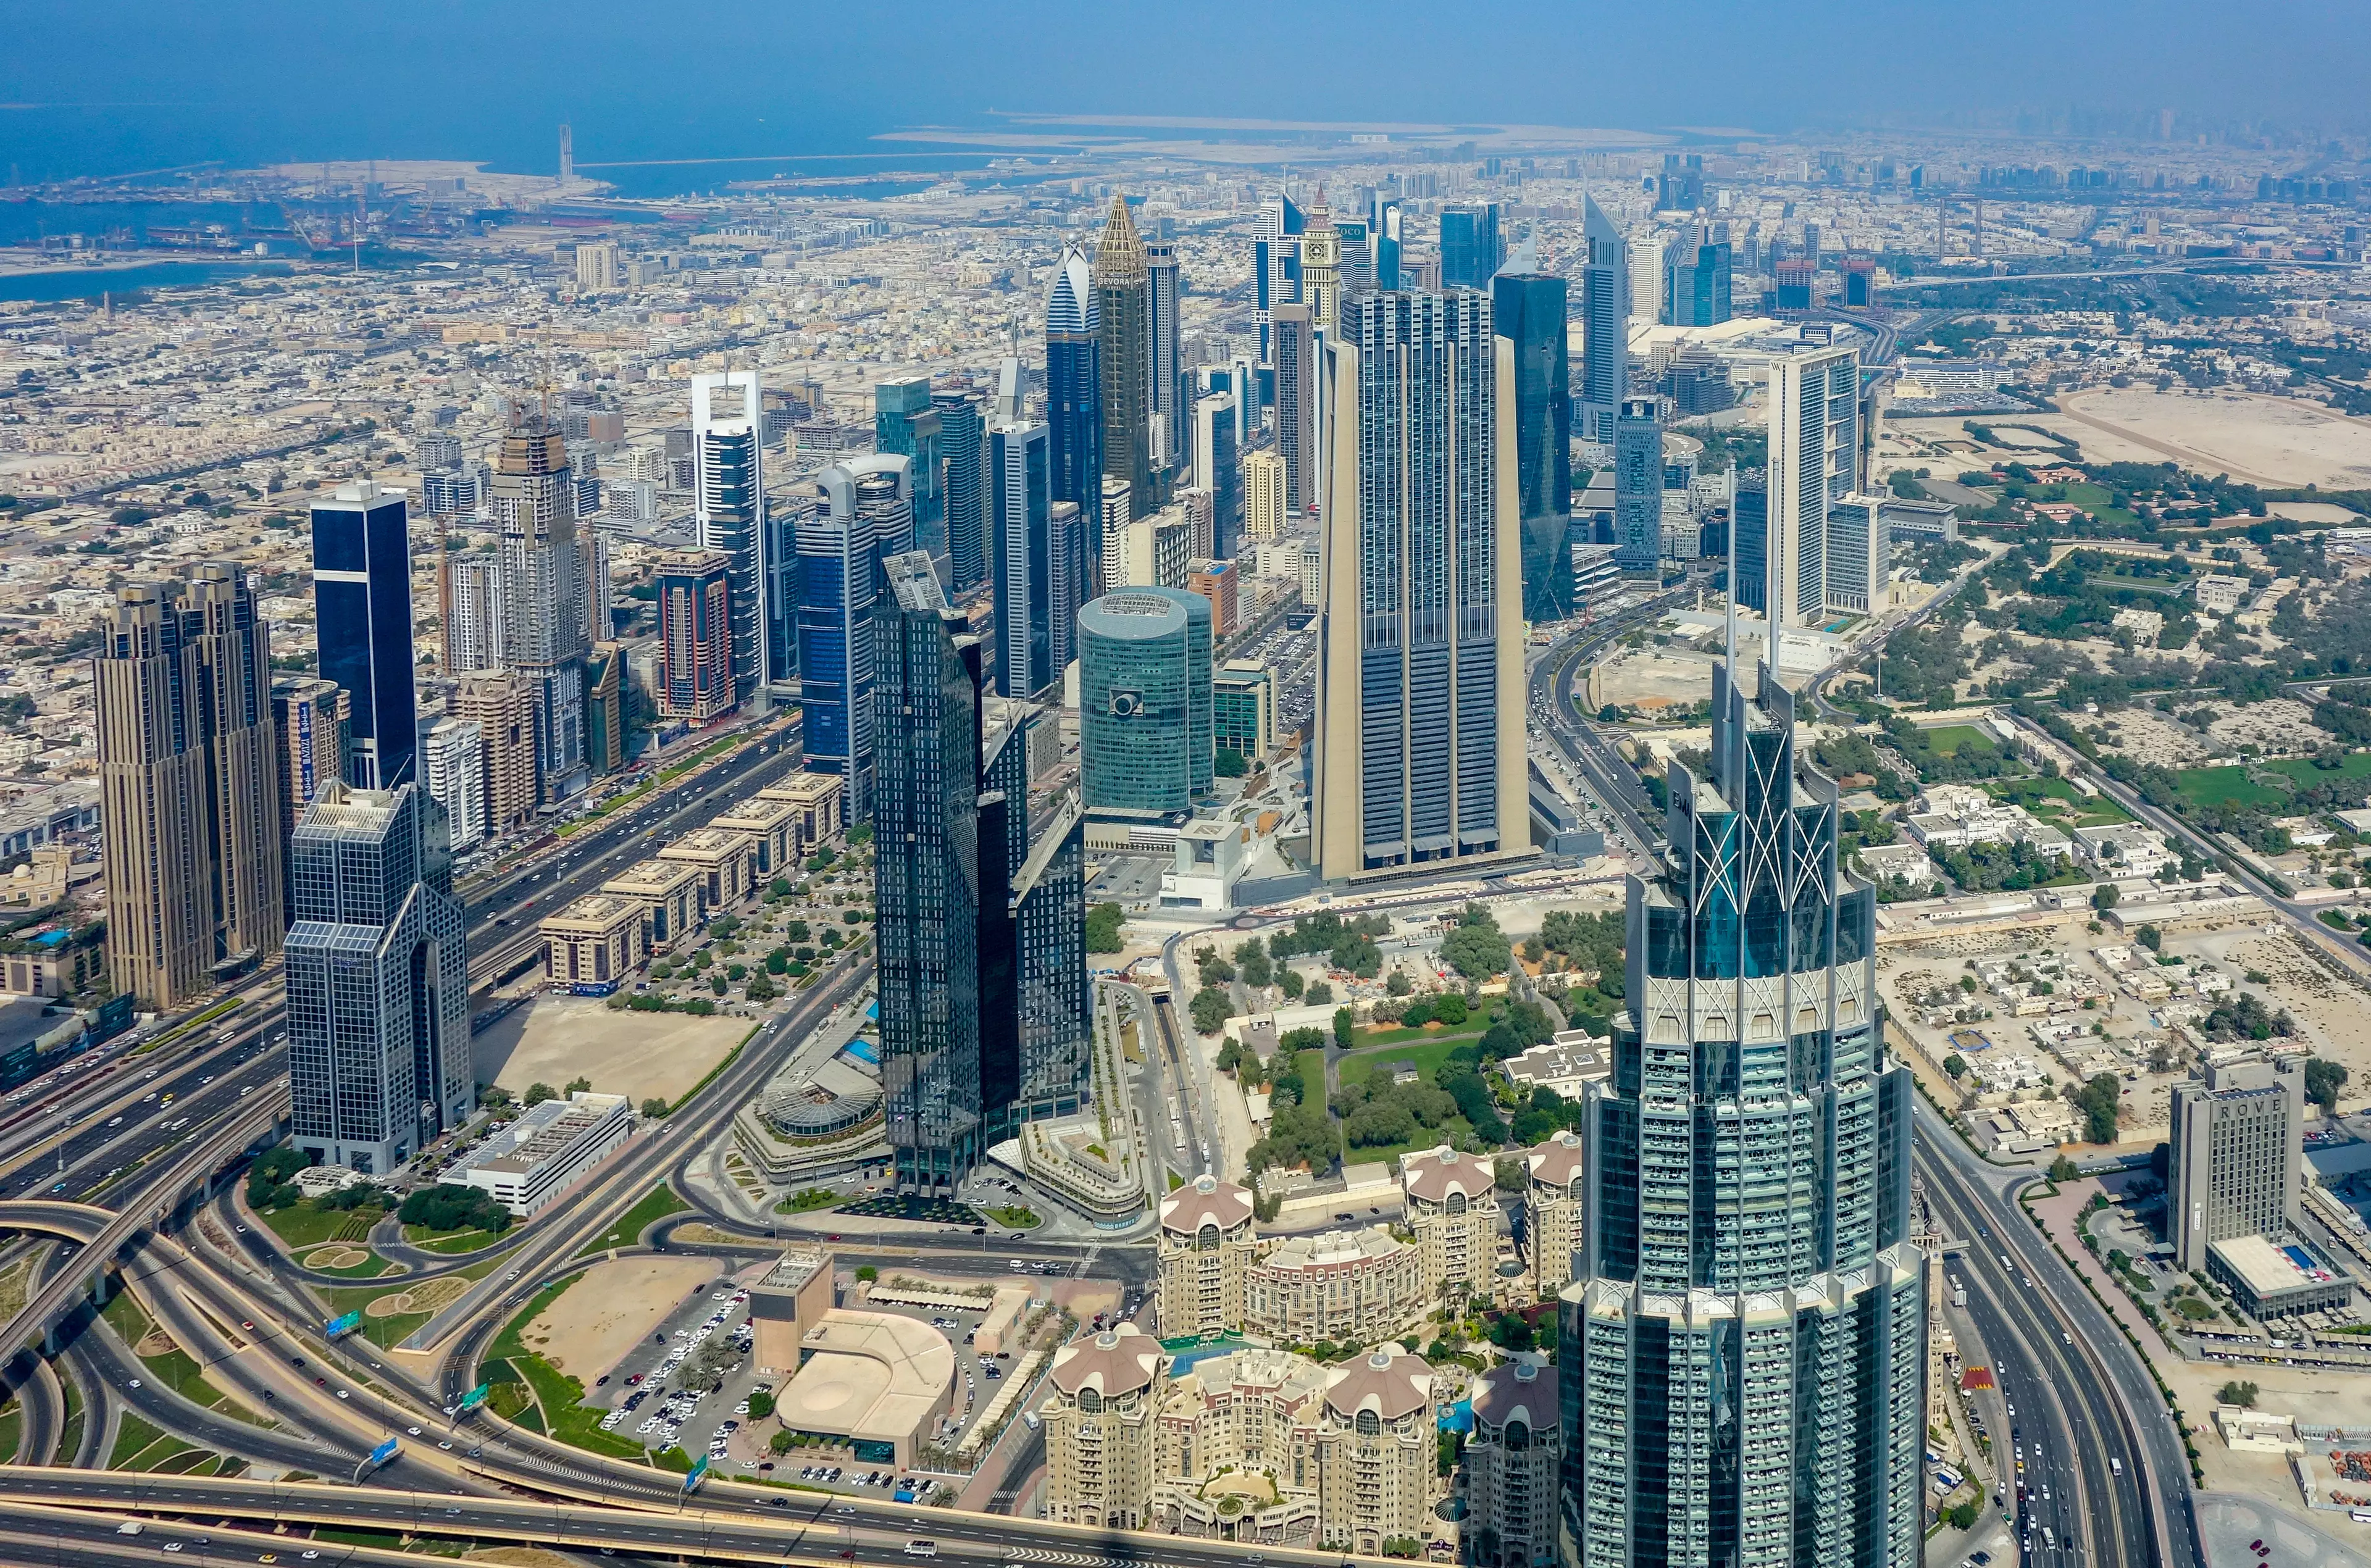 The present-day Dubai skyline.